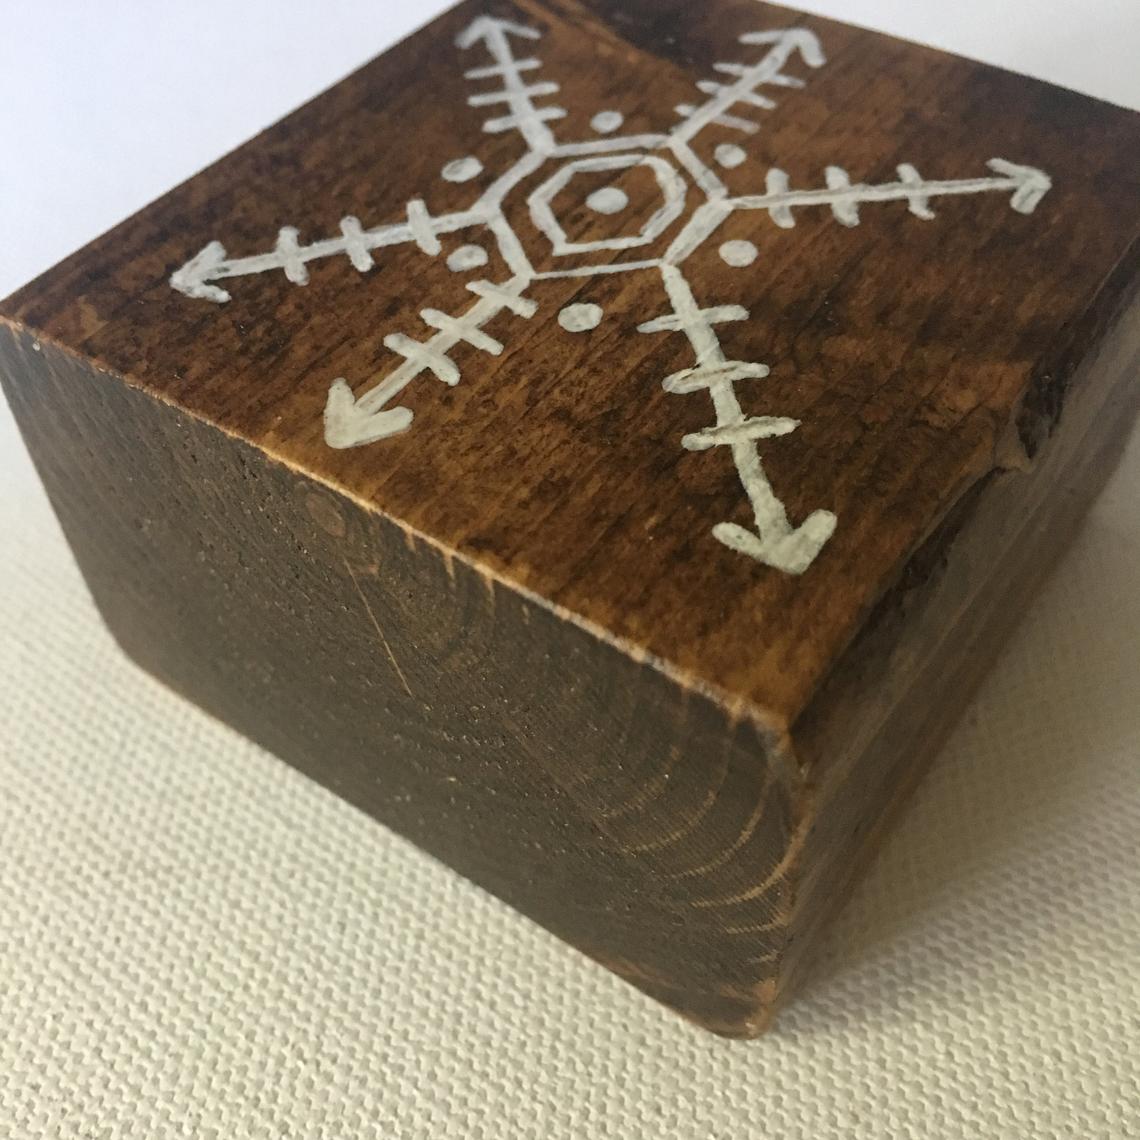 Rustic Wood Snowflake Blocks, Hand Painted Winter Decor